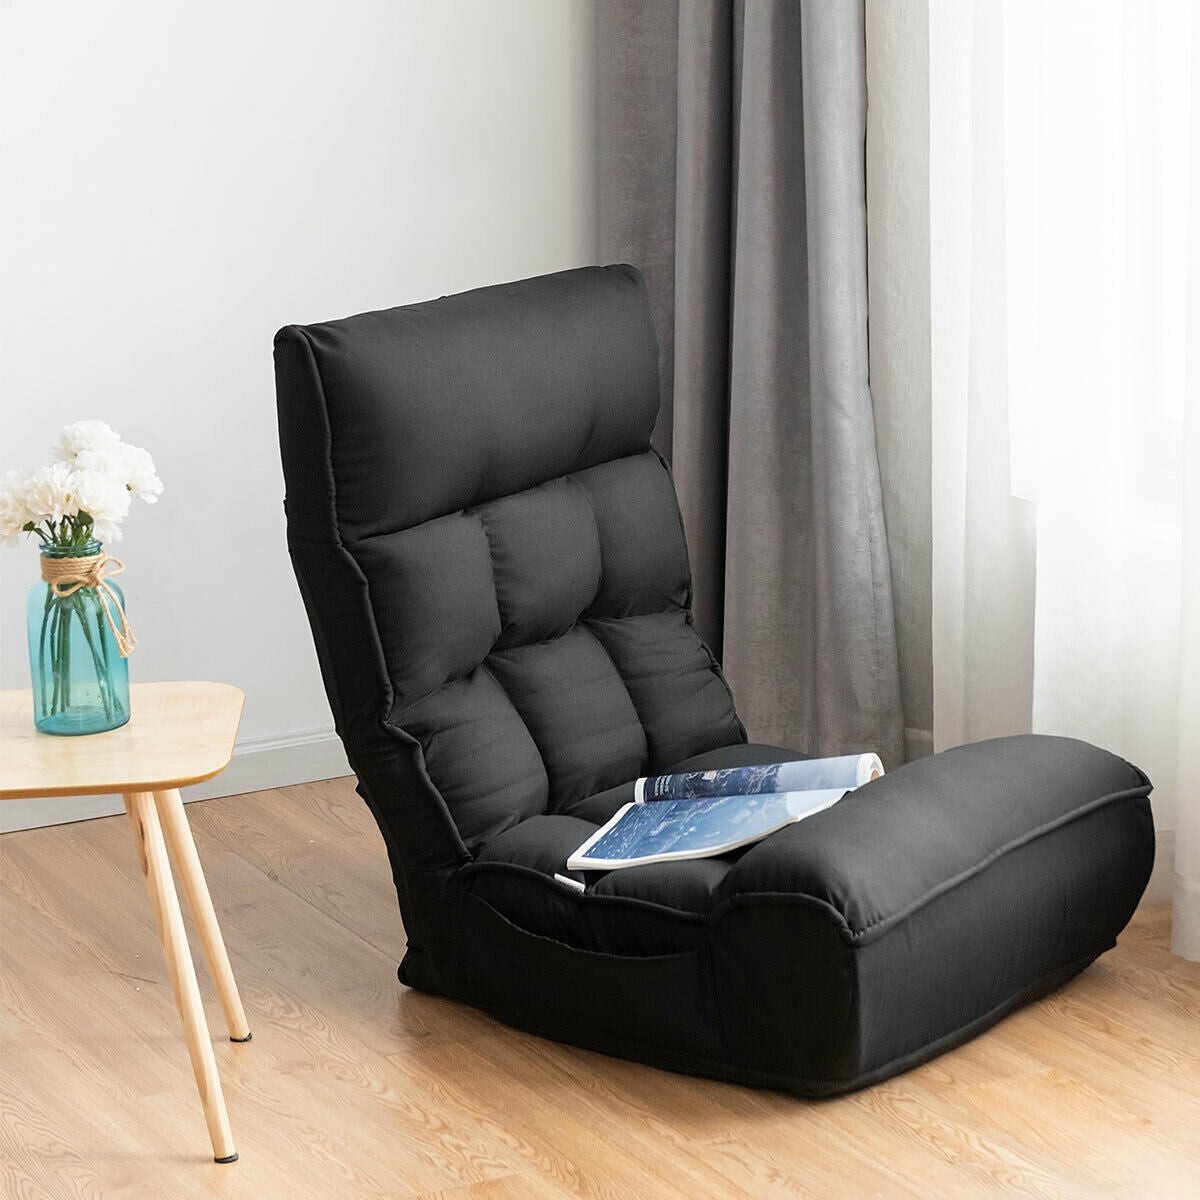 Folding Floor Gaming Chair Sleeper 4-Position Adjustable